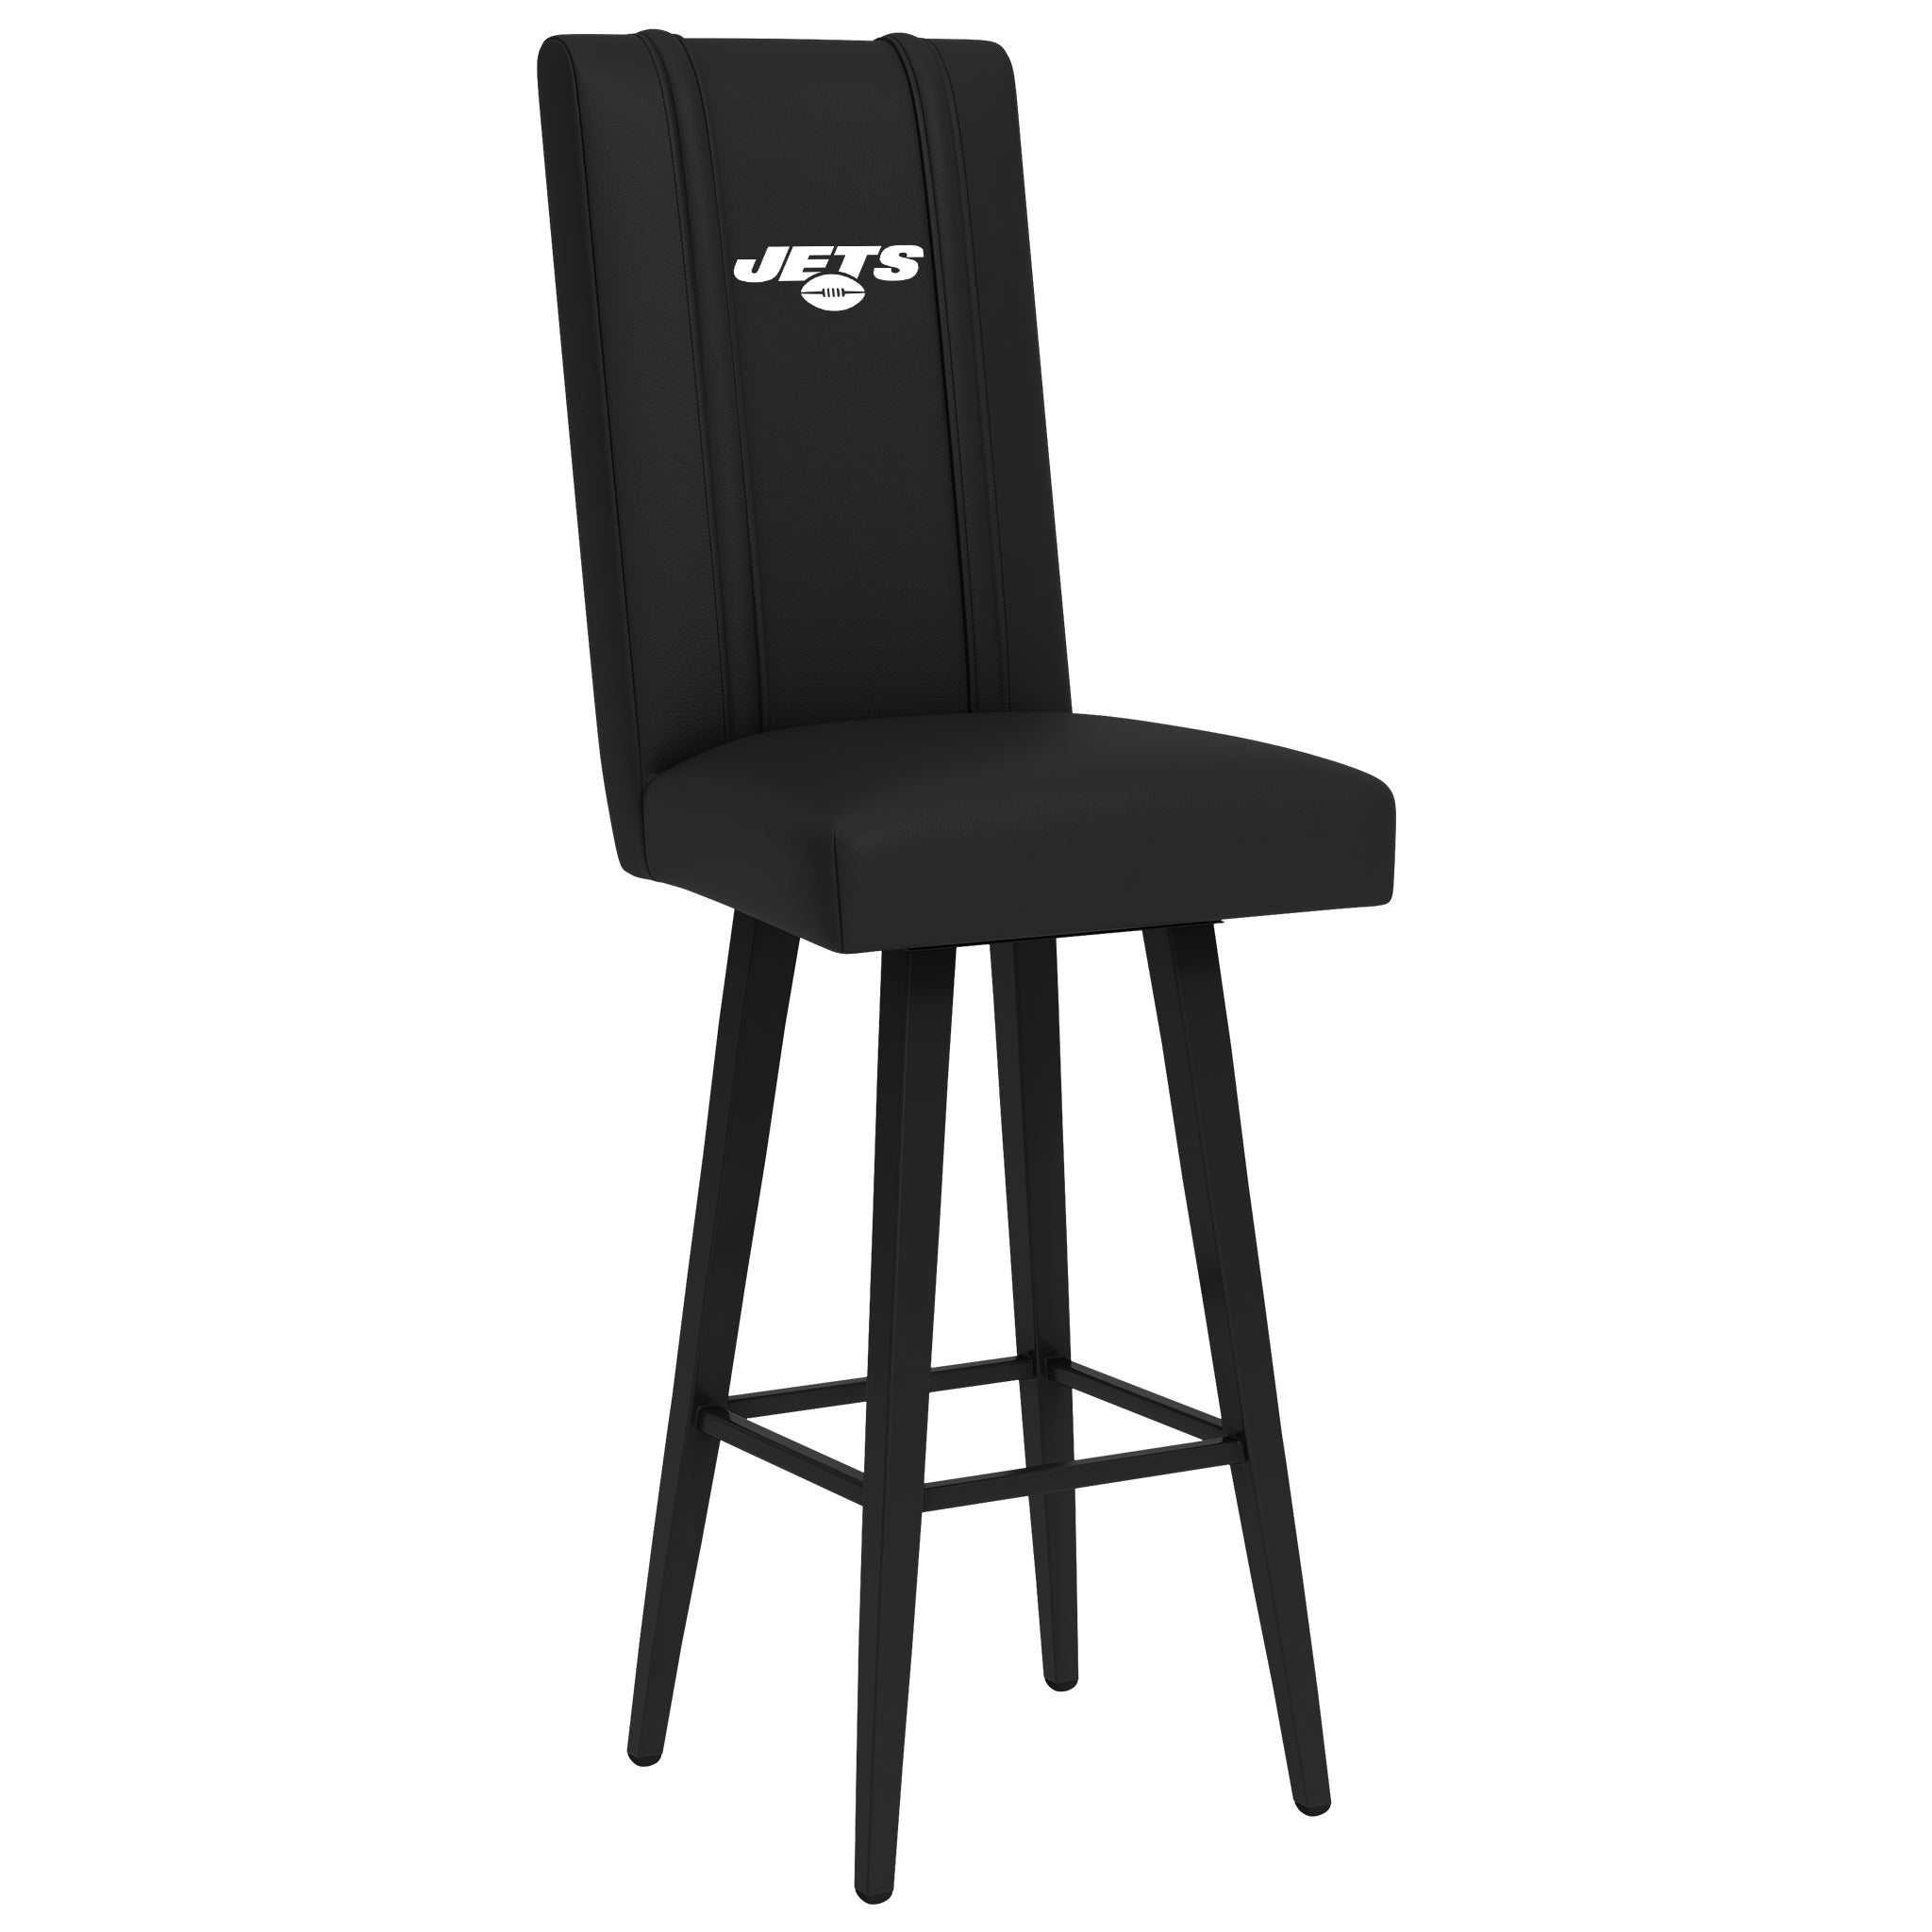 New York Jets Swivel Bar Stool - Chair - Furniture - Kitchen